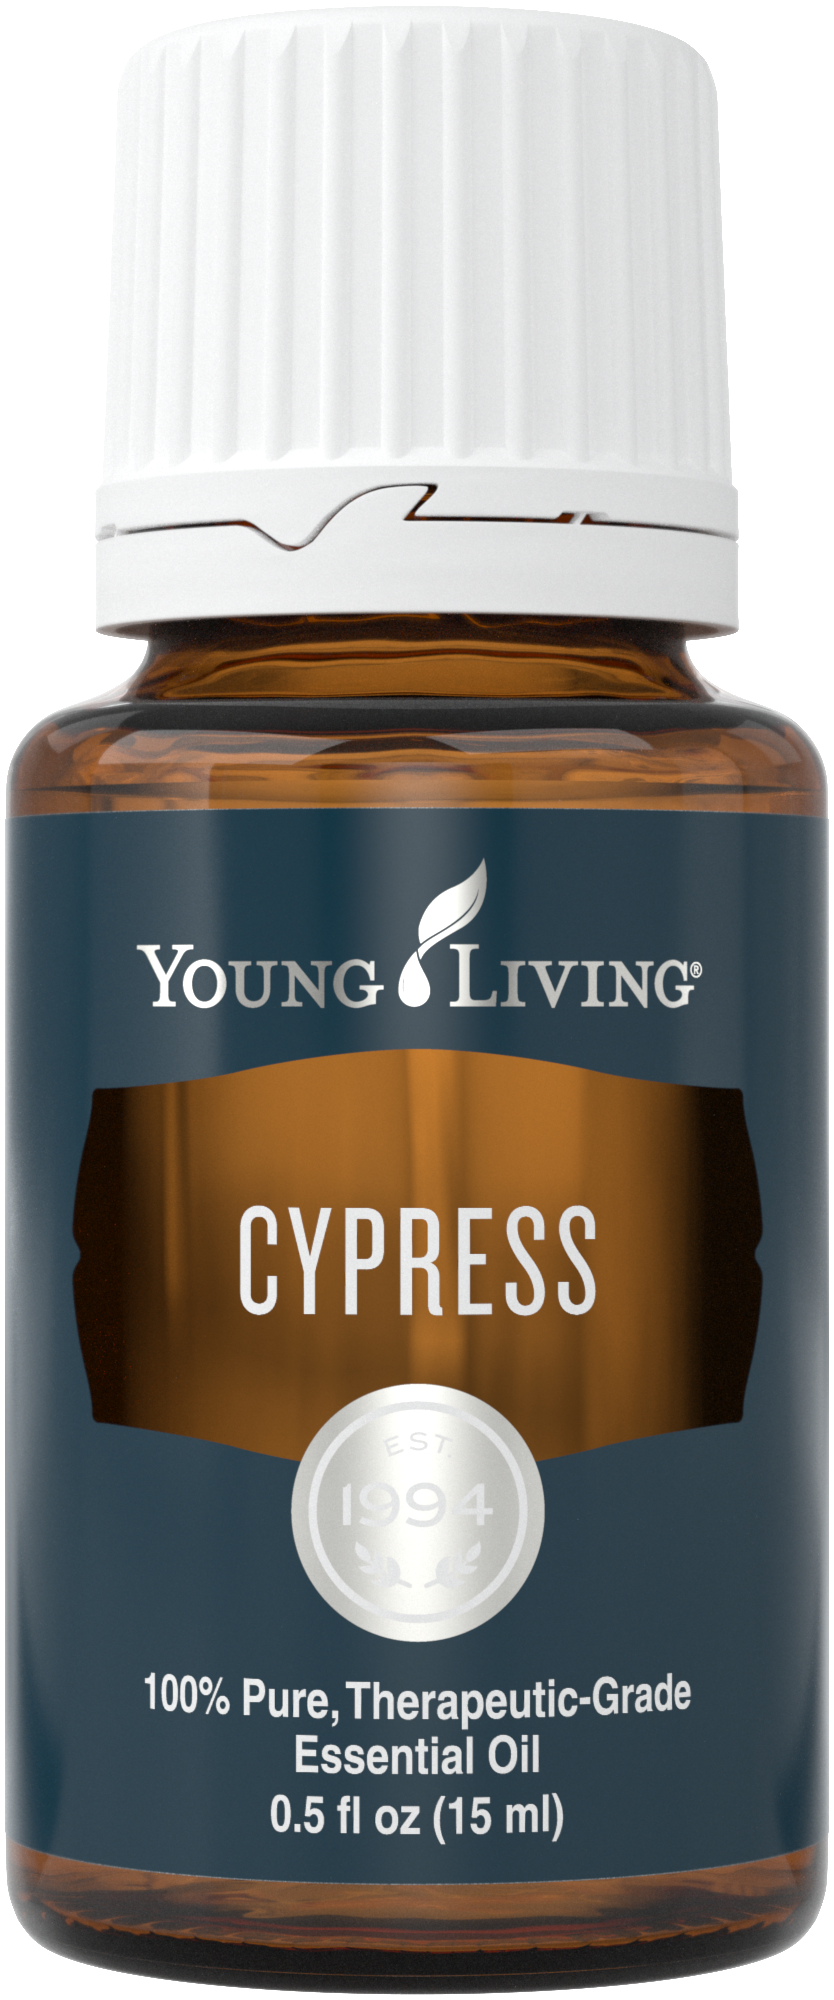 Cypress 15ml Silo.png